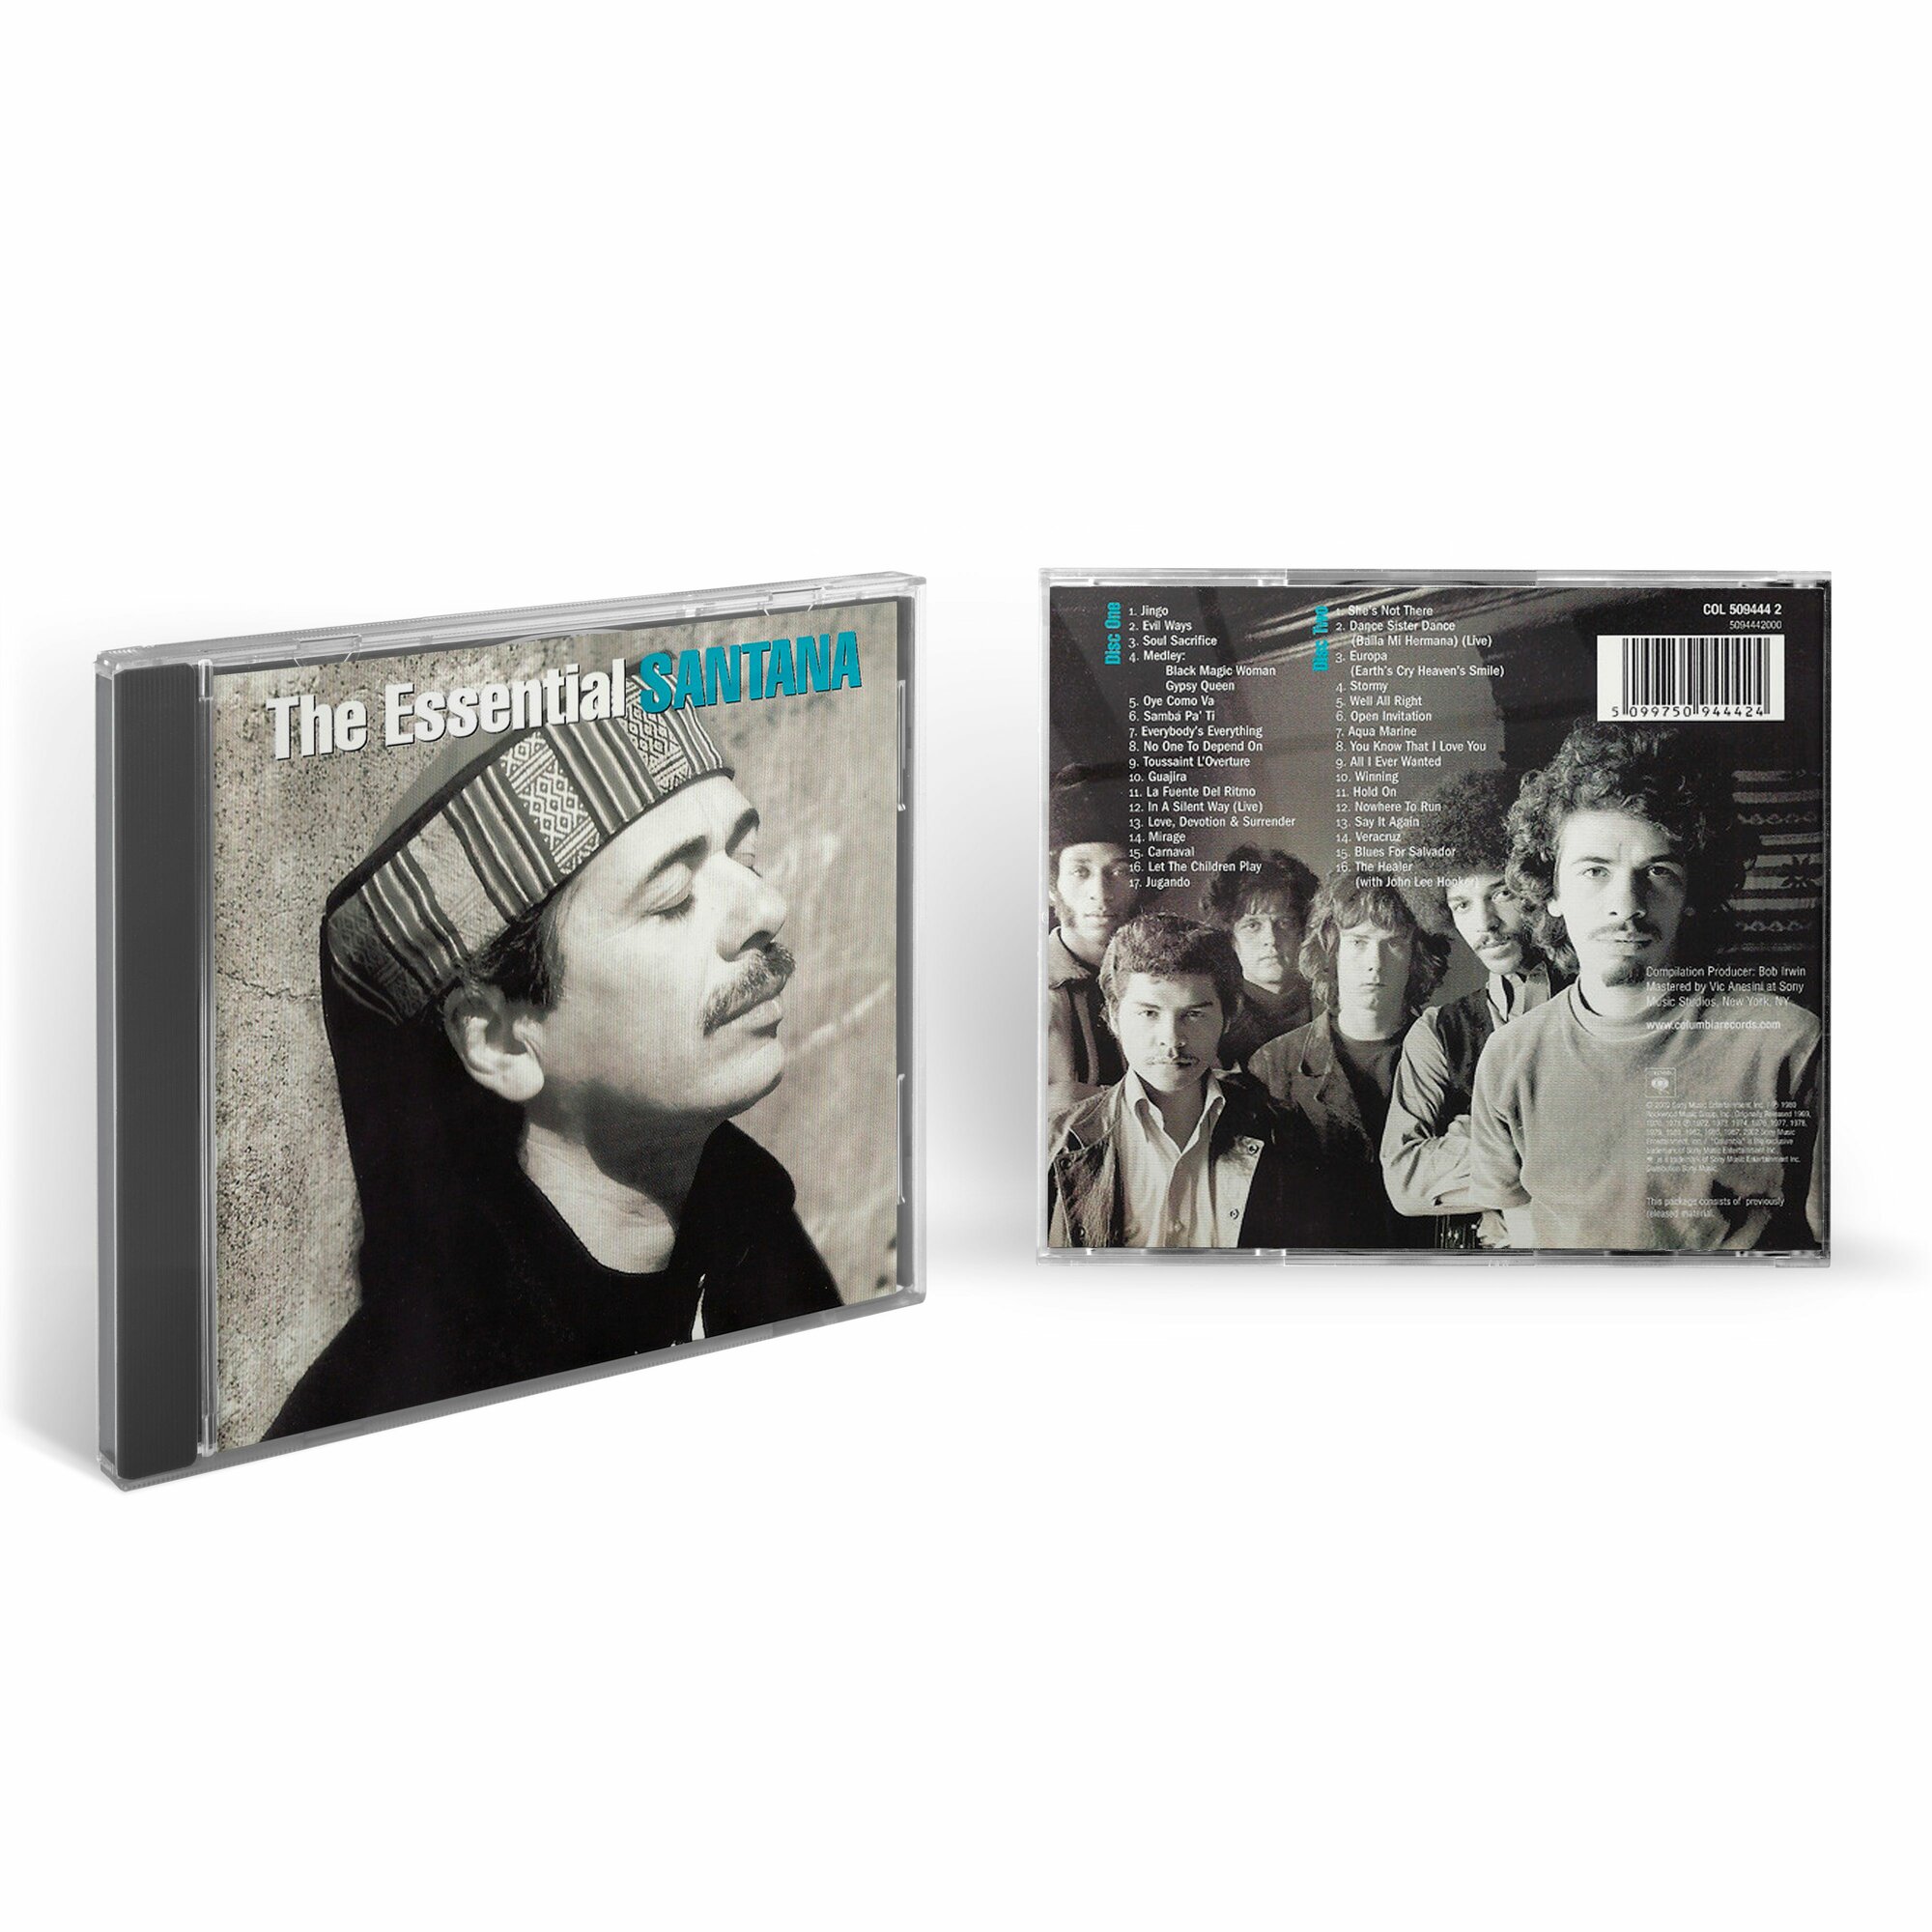 Santana - The Essential (2CD) 2008 Columbia Jewel Аудио диск